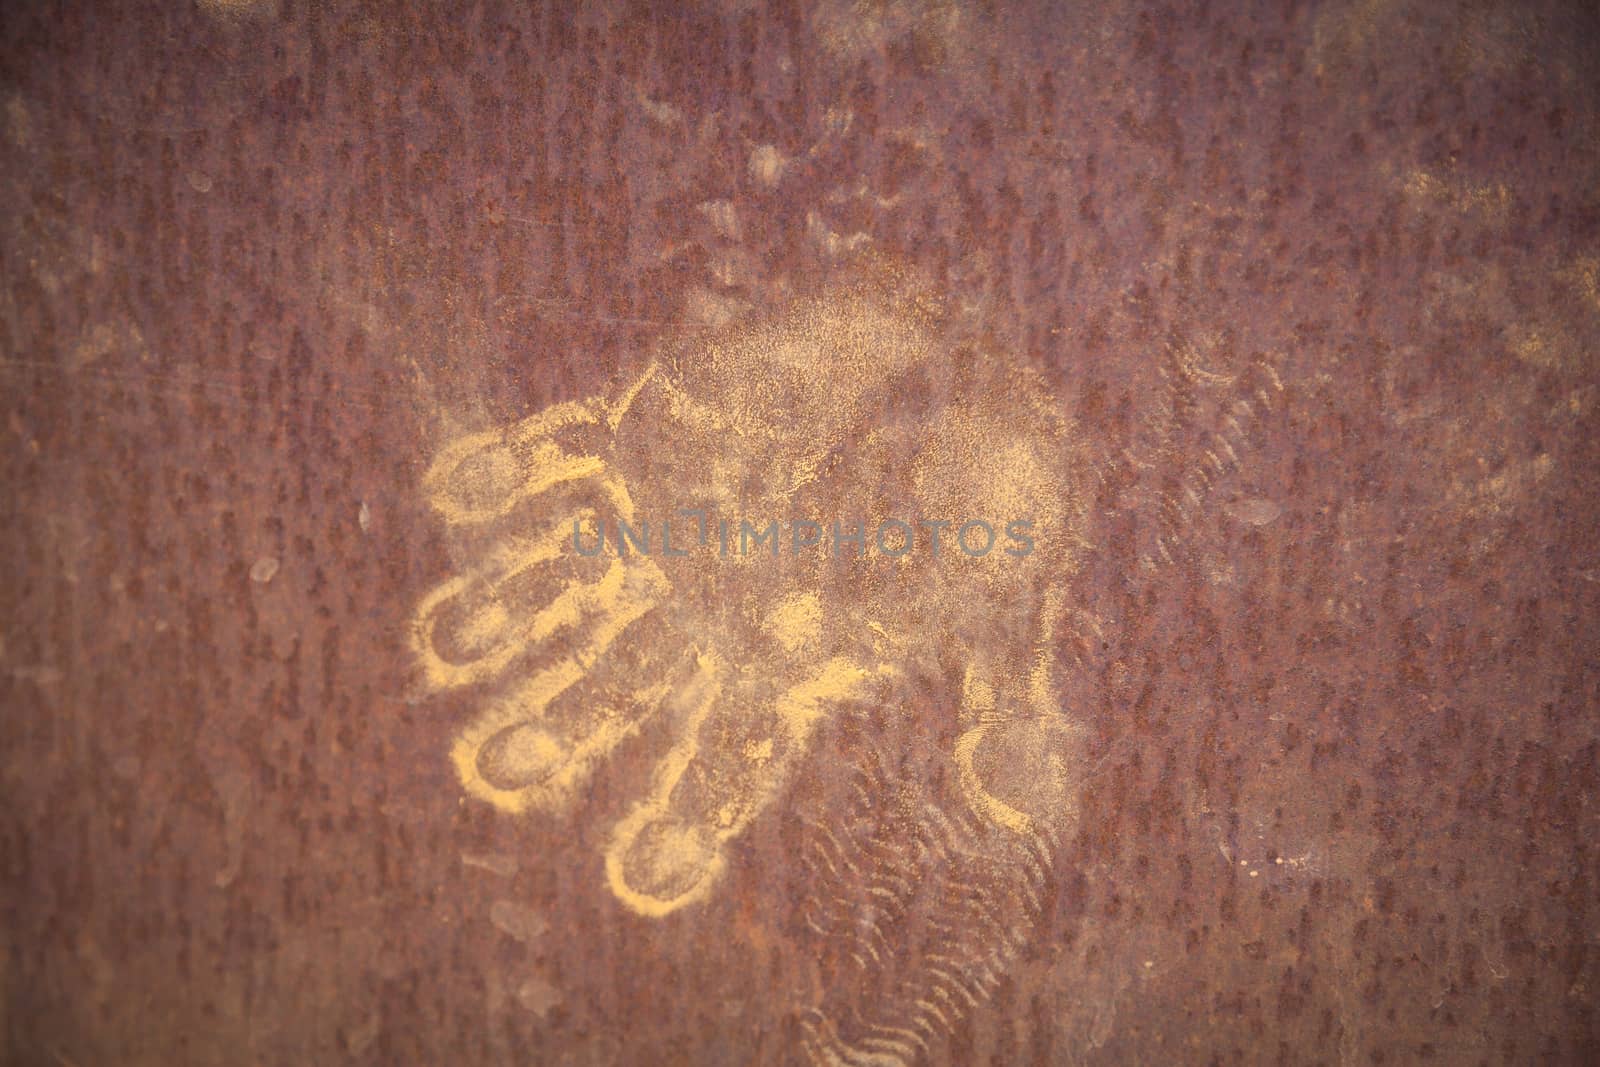 Handprints in ocher in Roussillion in Provence famous for the ocher quarries